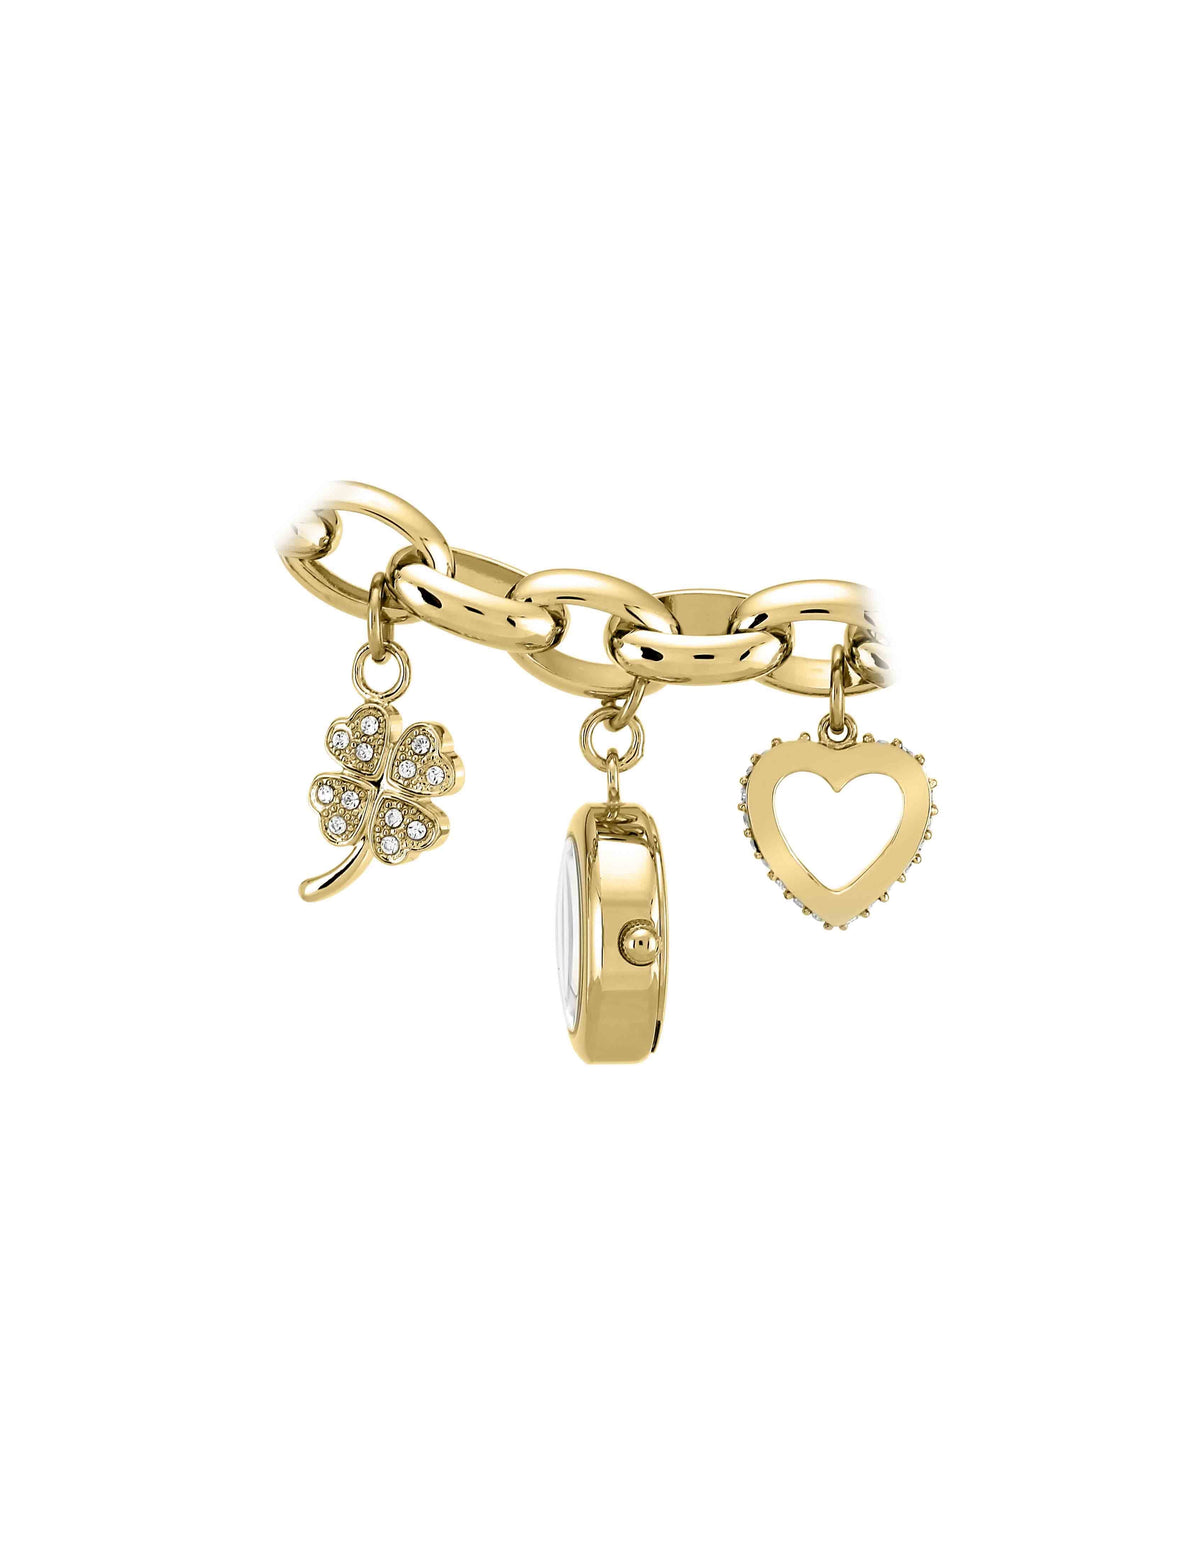 Anne Klein  Crystal Accented Charm Bracelet Watch